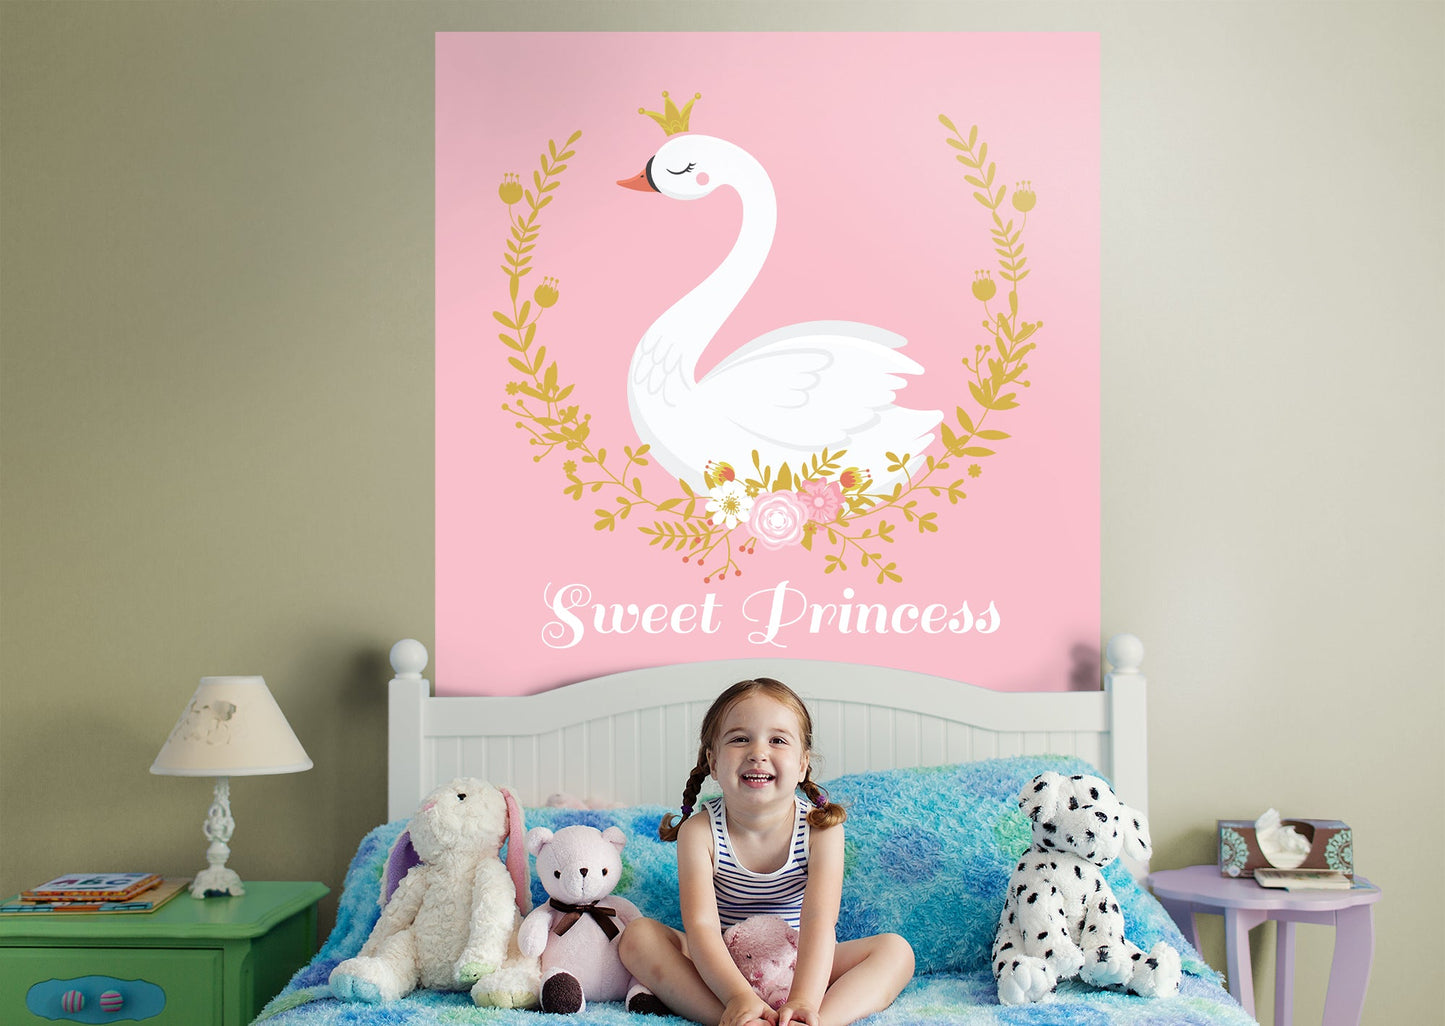 Nursery Princess:  Sweet Princess Mural        -   Removable Wall   Adhesive Decal